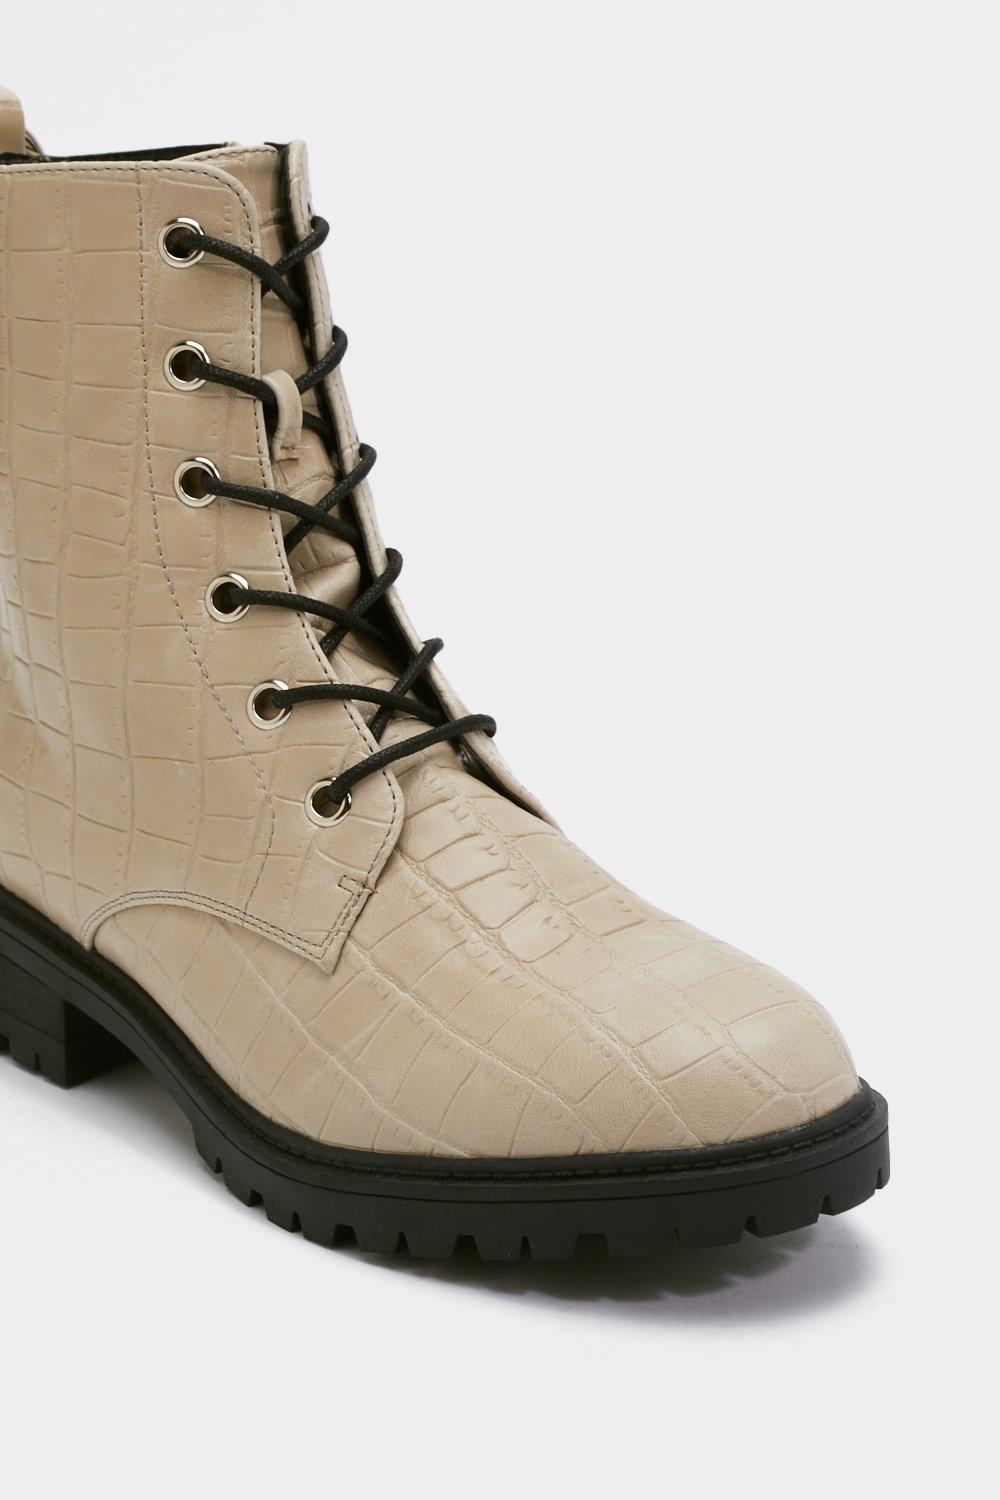 croc biker boots